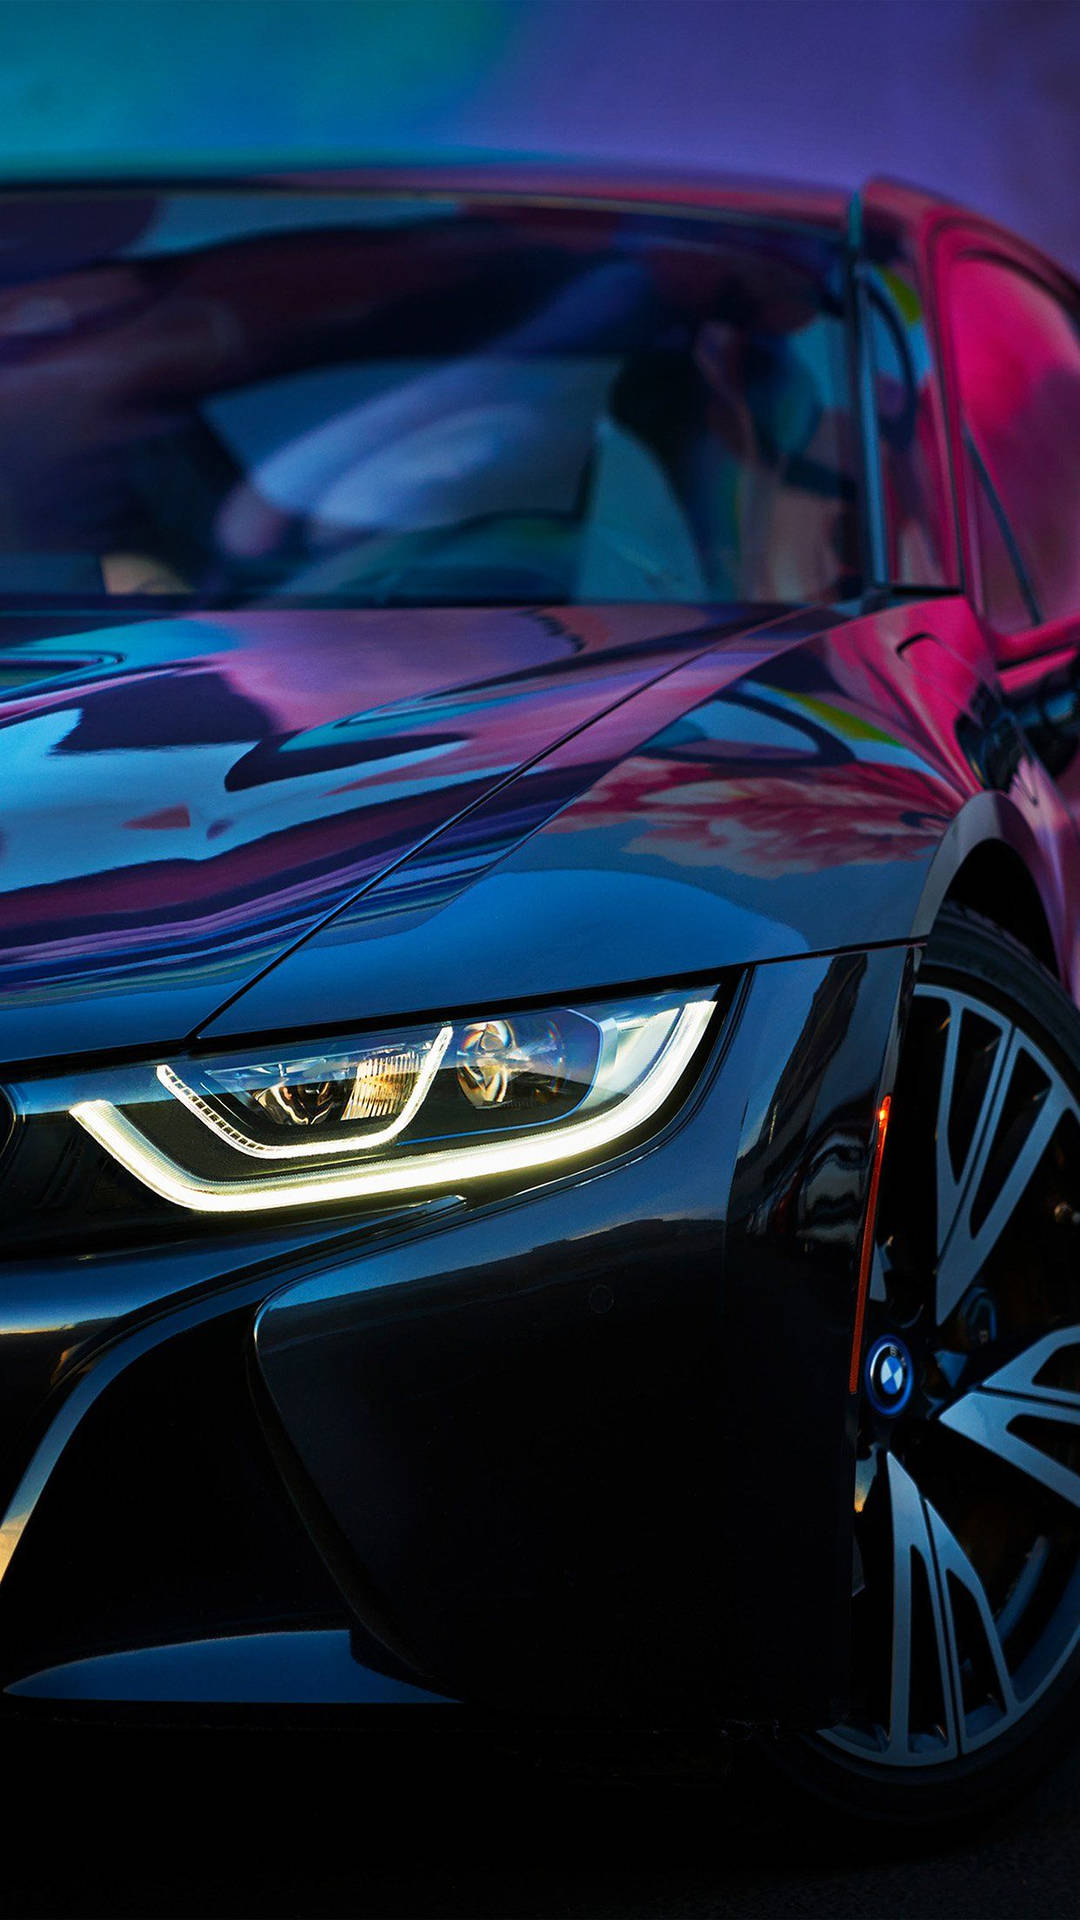 The BMW i8 revolutionizing the world with its advanced hybrid powertrain. Wallpaper